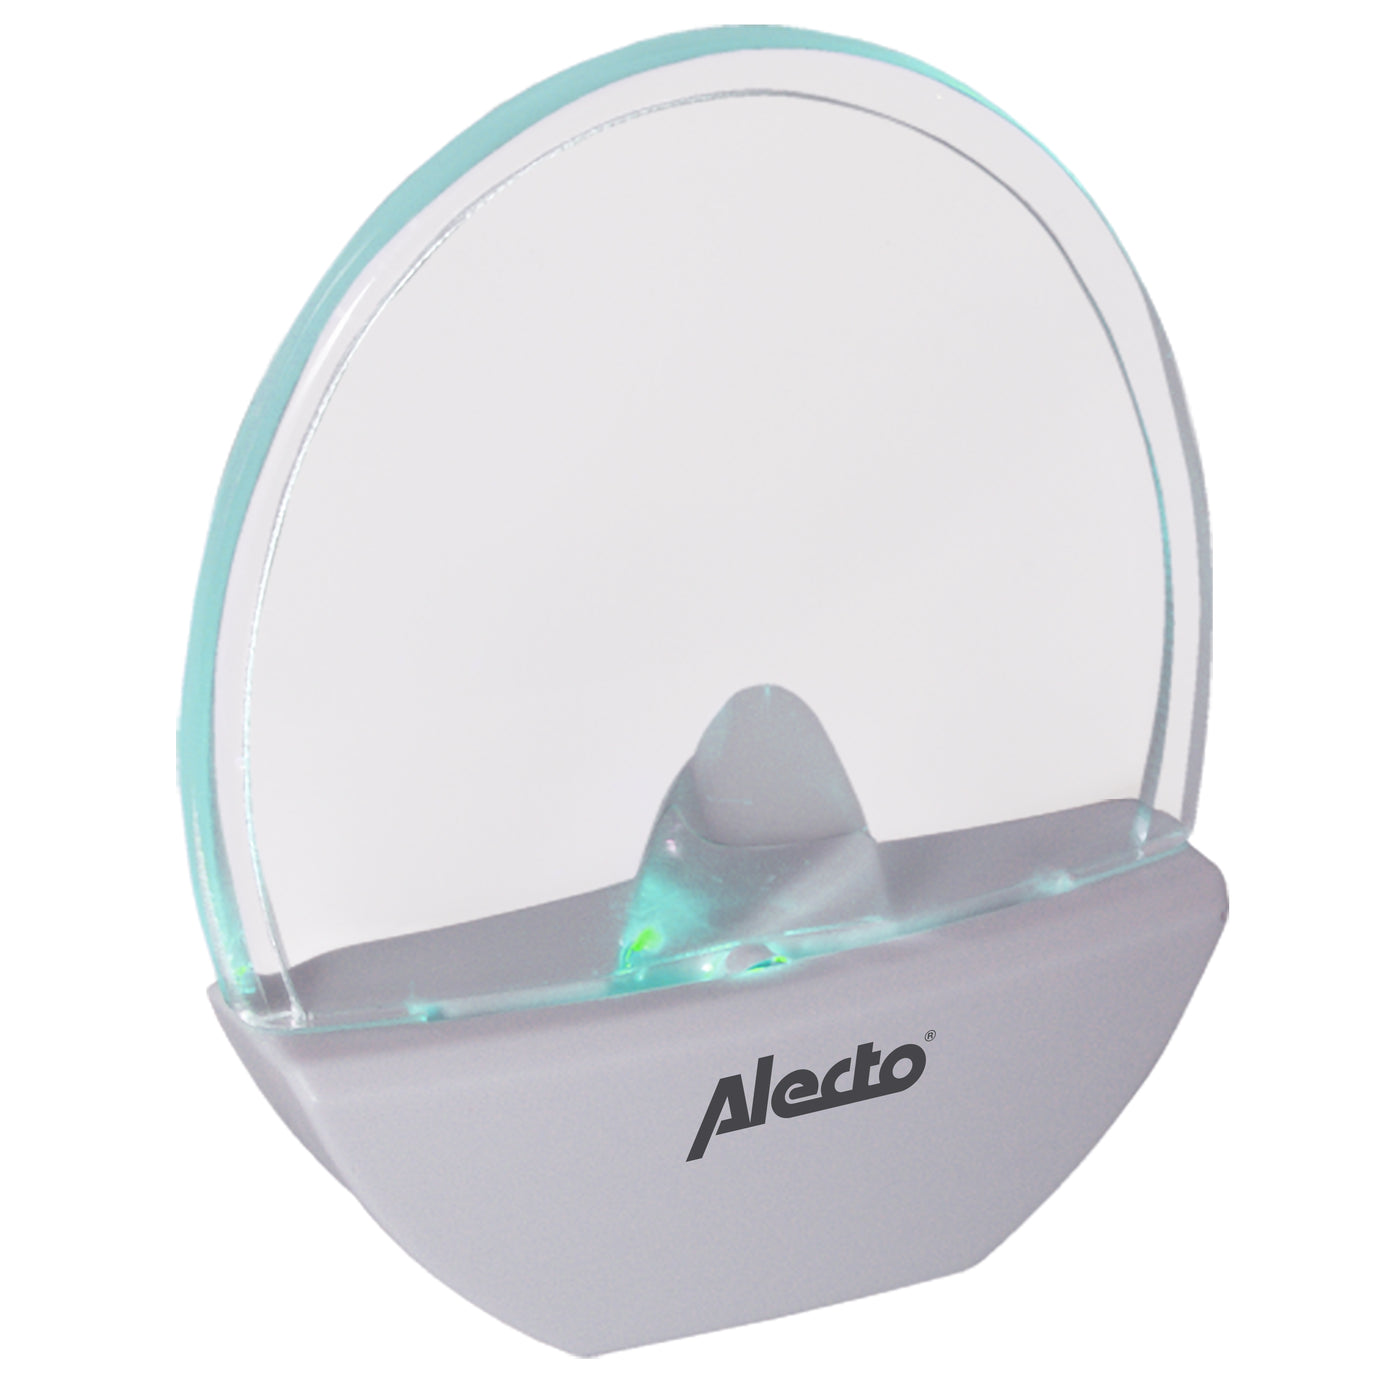 Alecto ANV-18 - LED night light, white